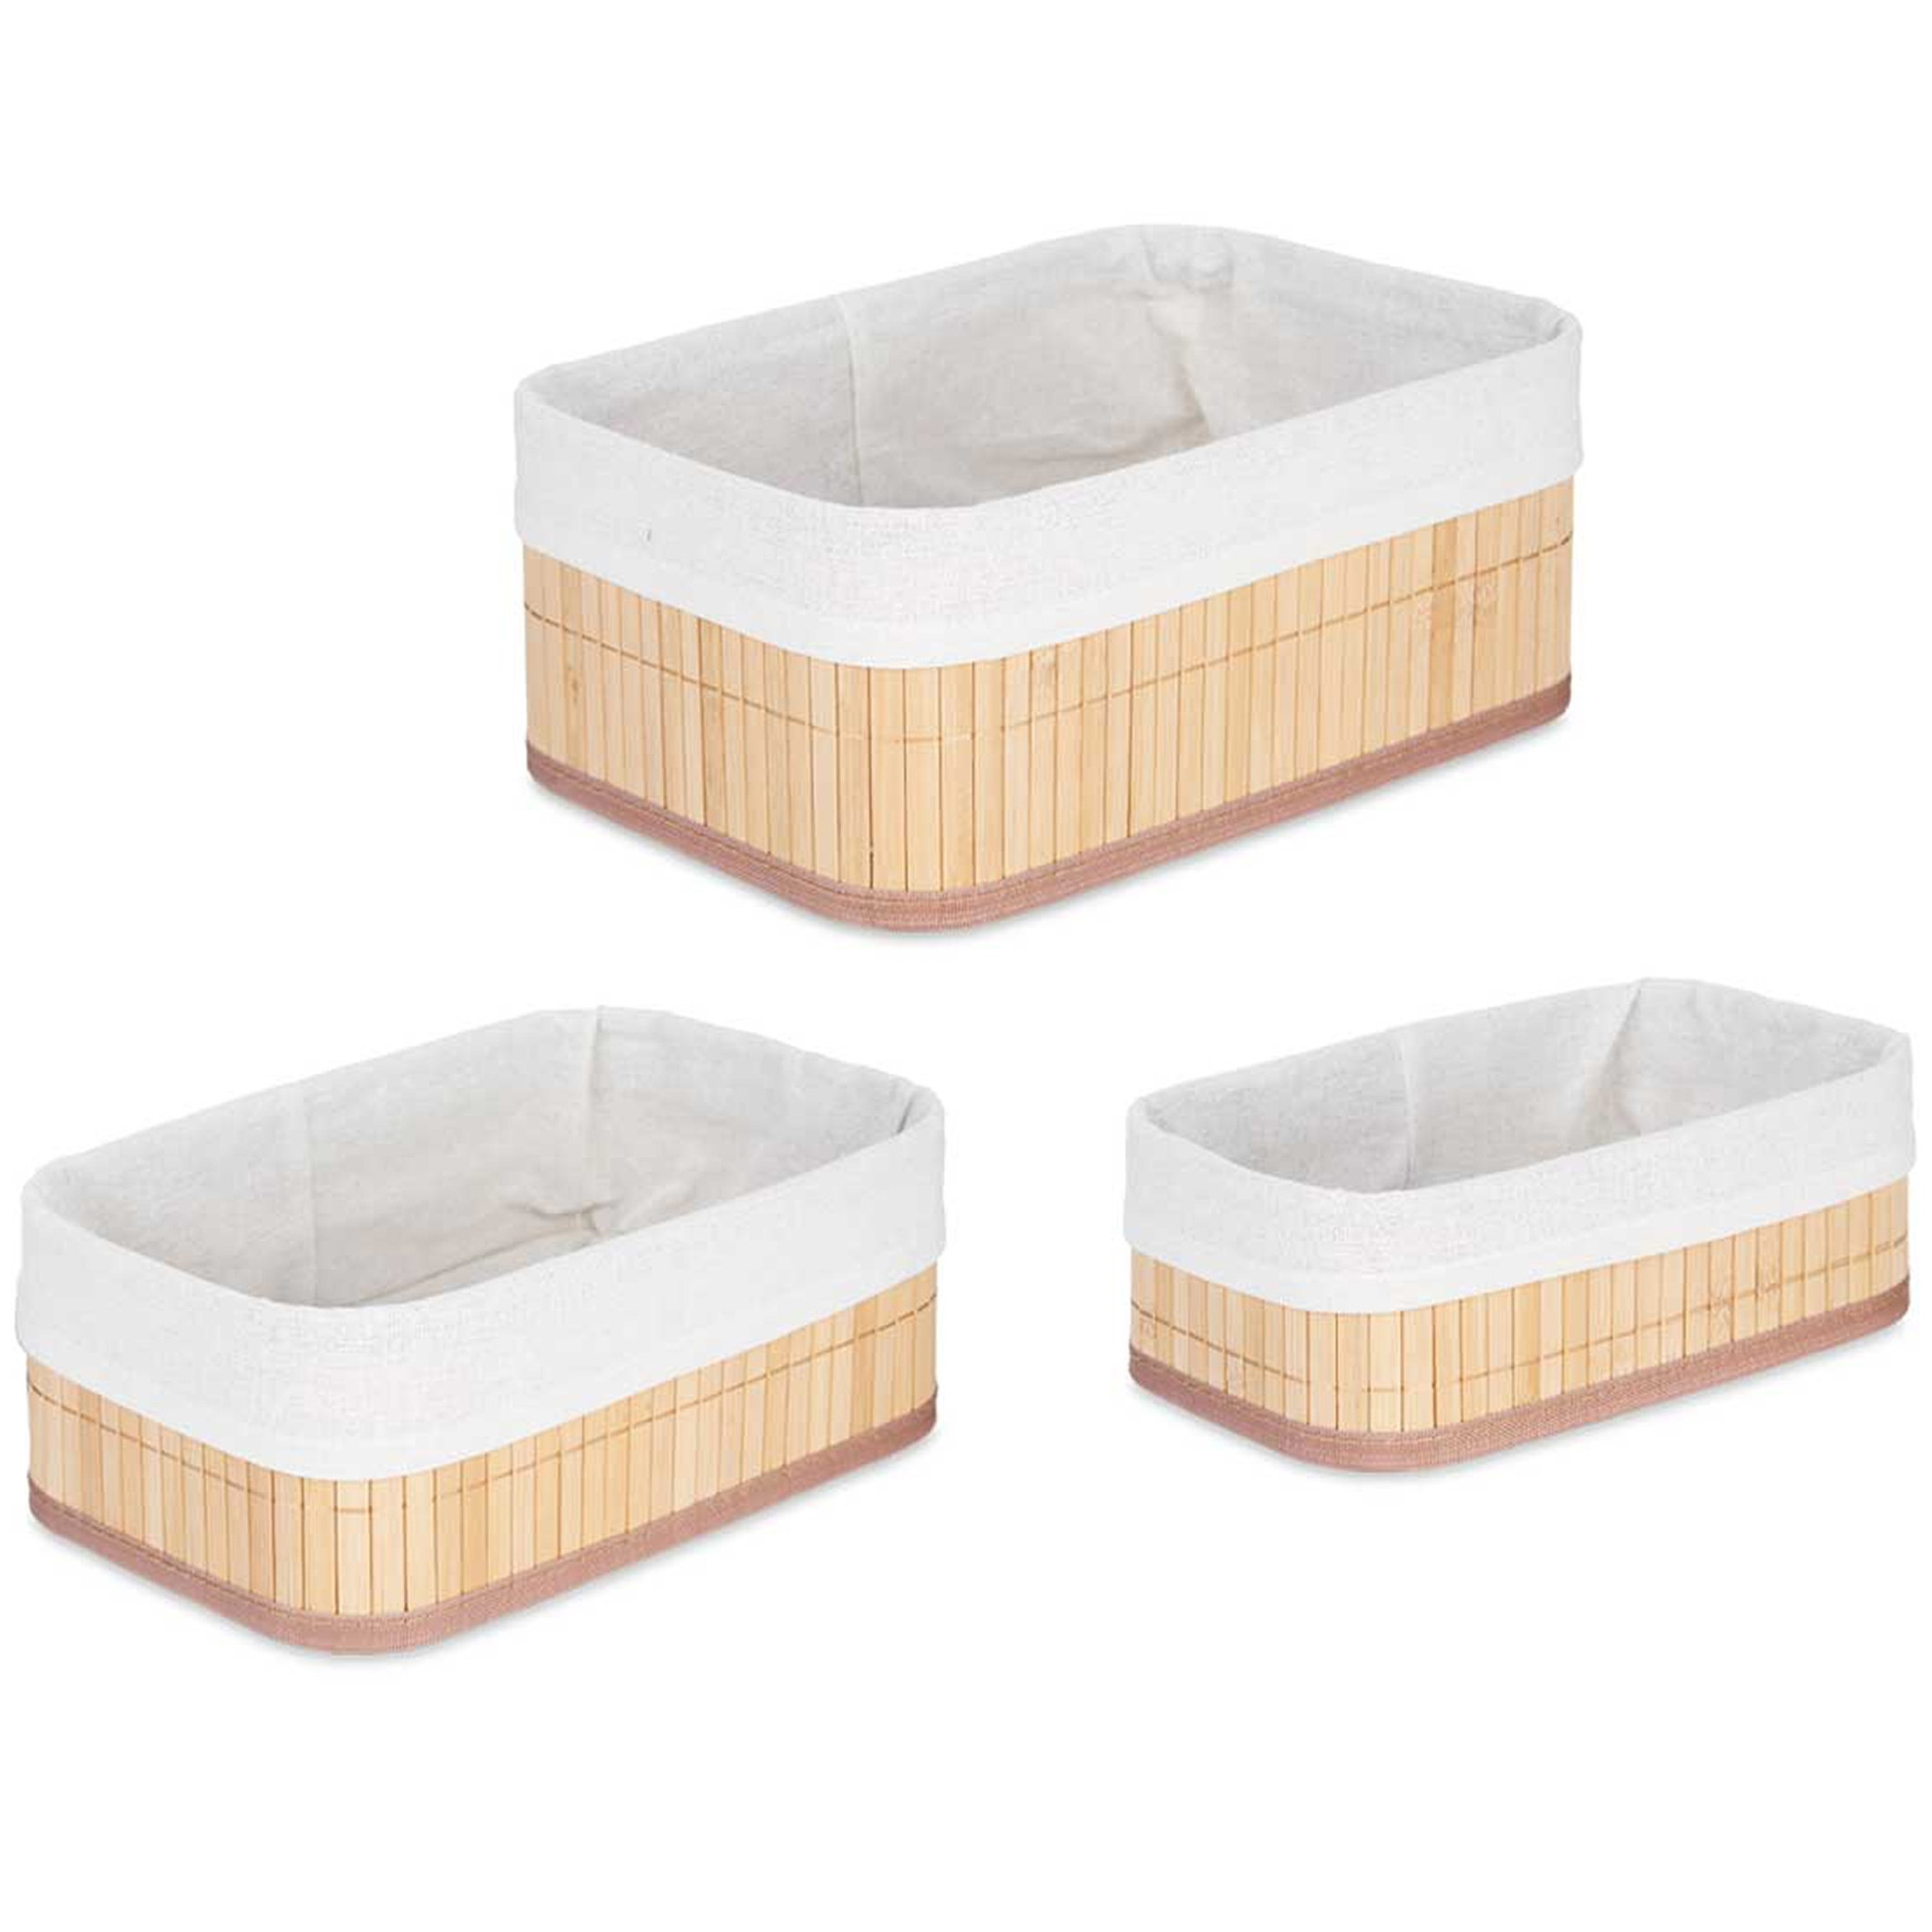 Kipit Badkamer-Toilet ruimte opbergmandjes bamboe-stof wit set 3x stuks